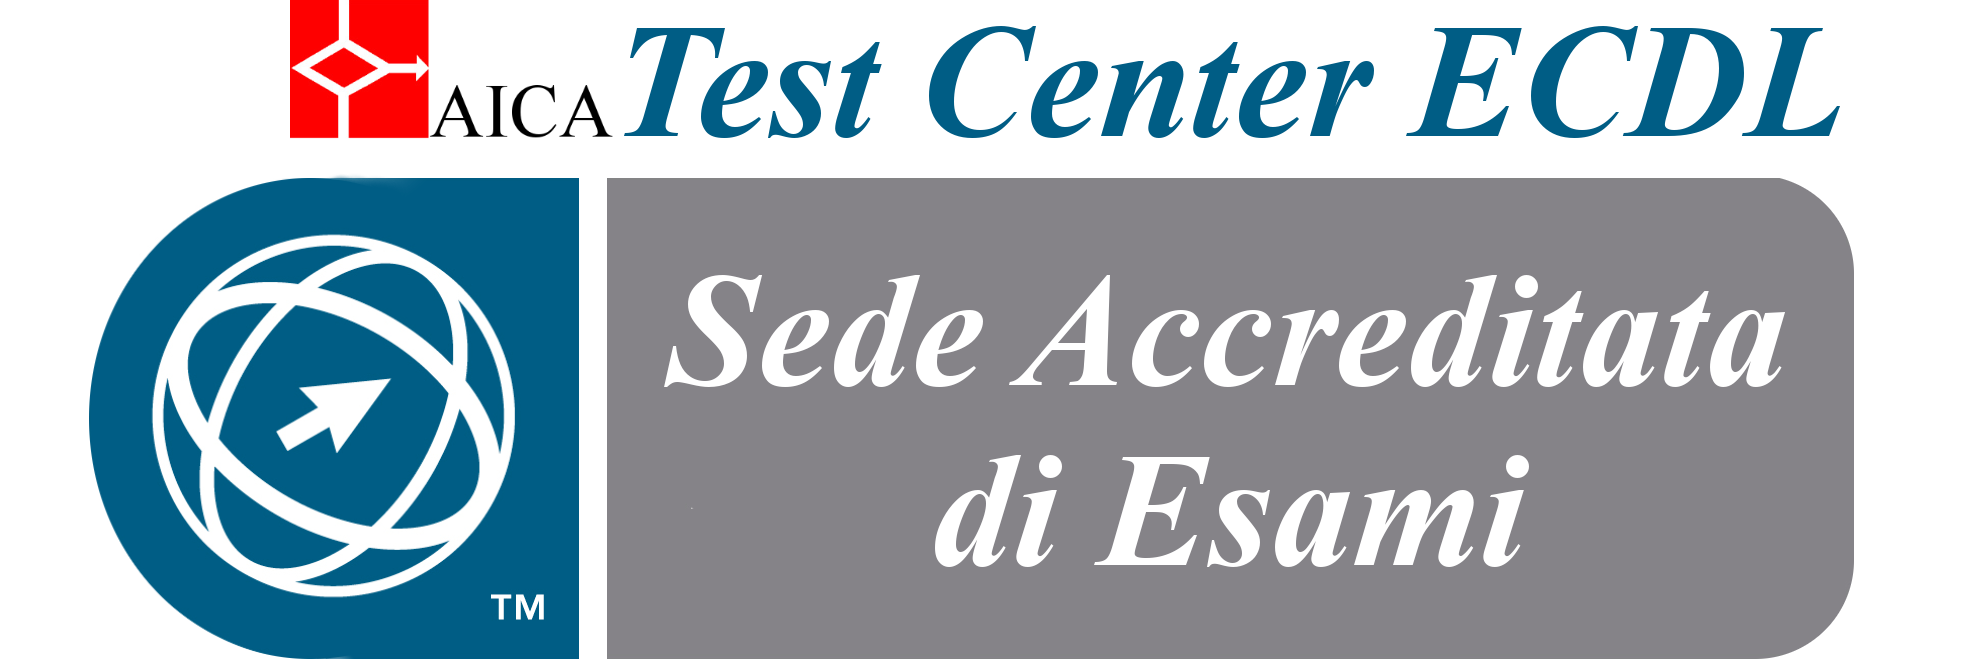 ecdl test center